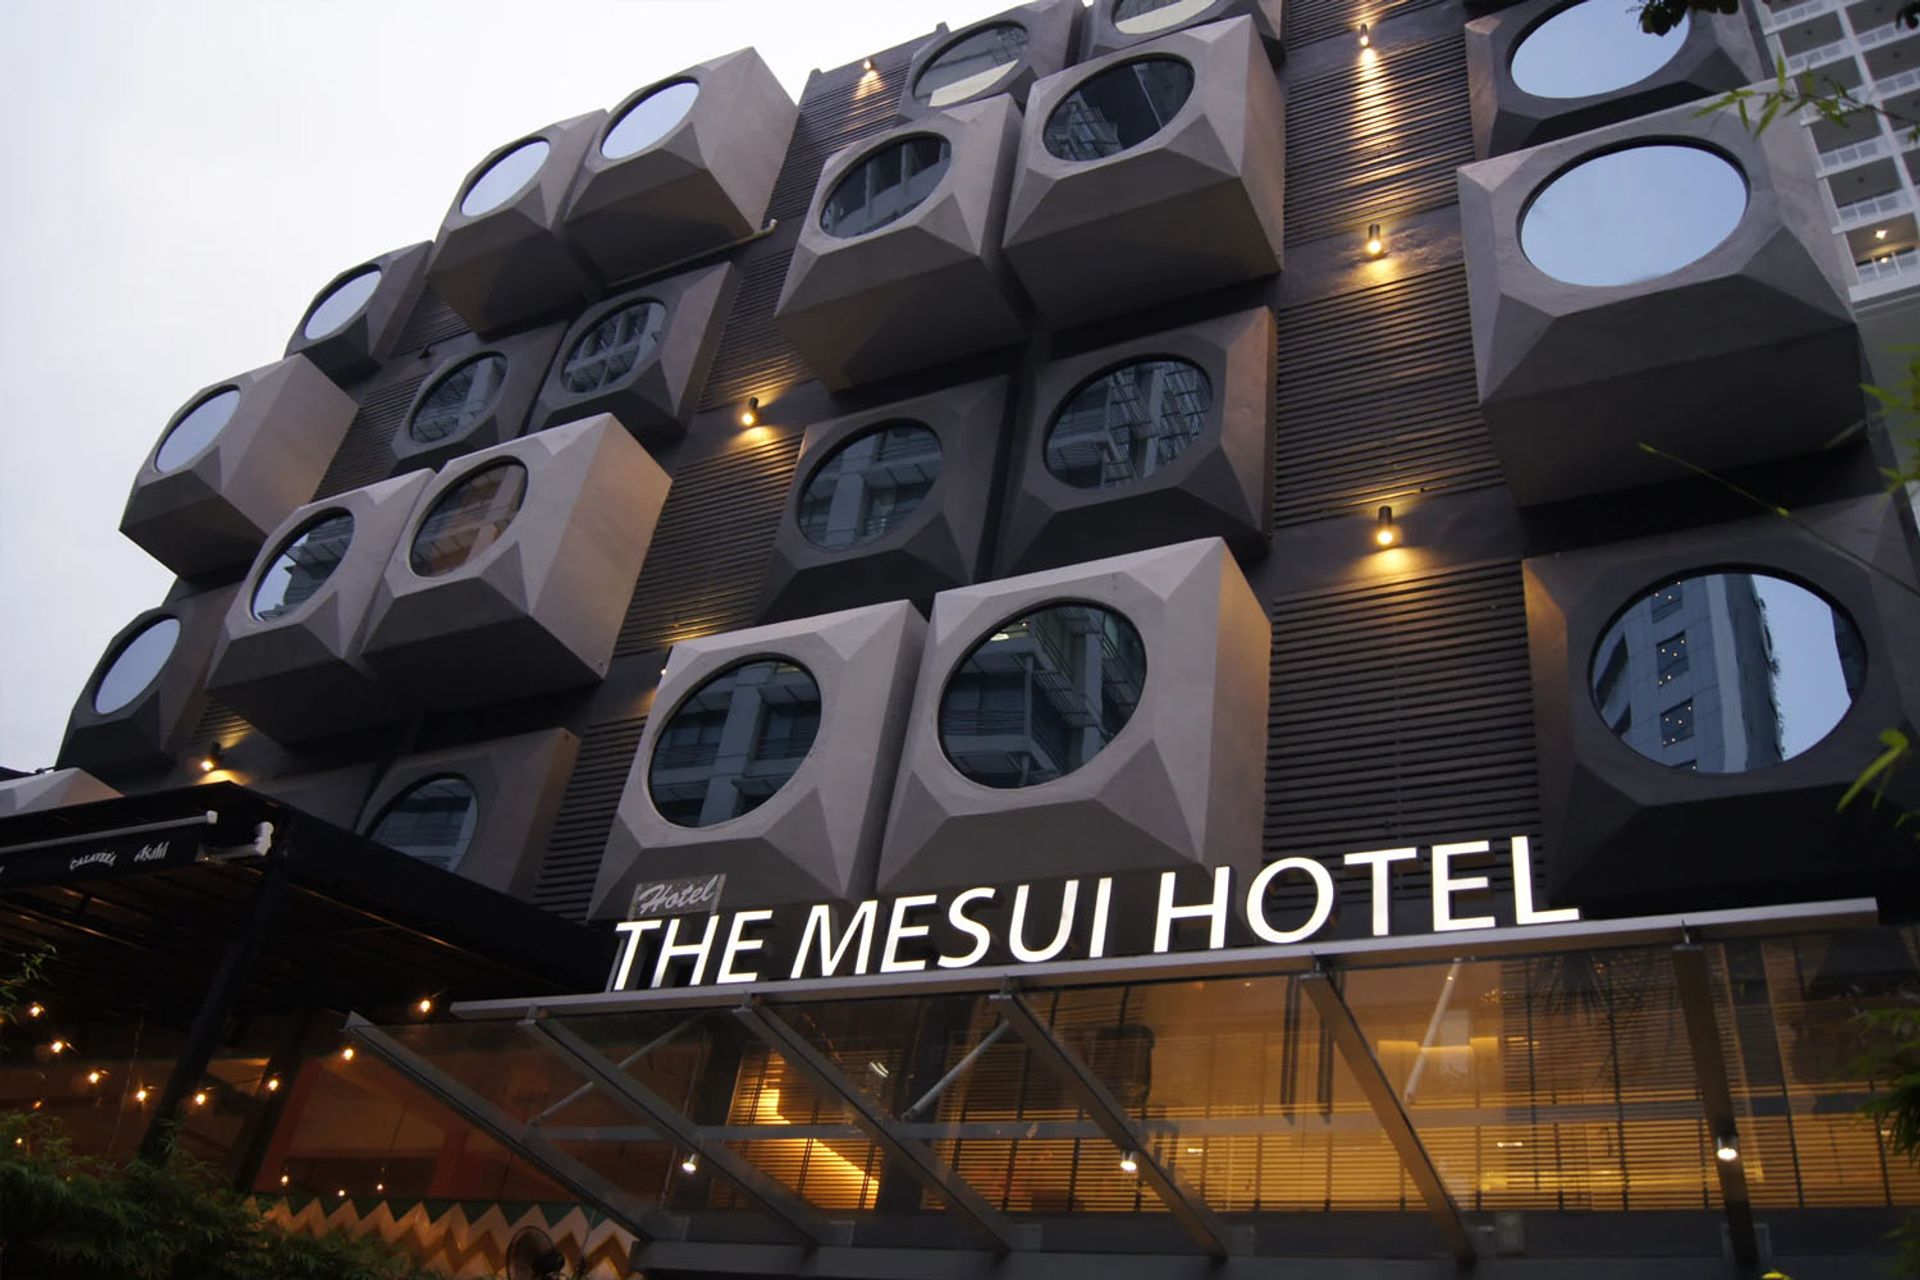  The Mesui Hotel, Kuala Lumpur